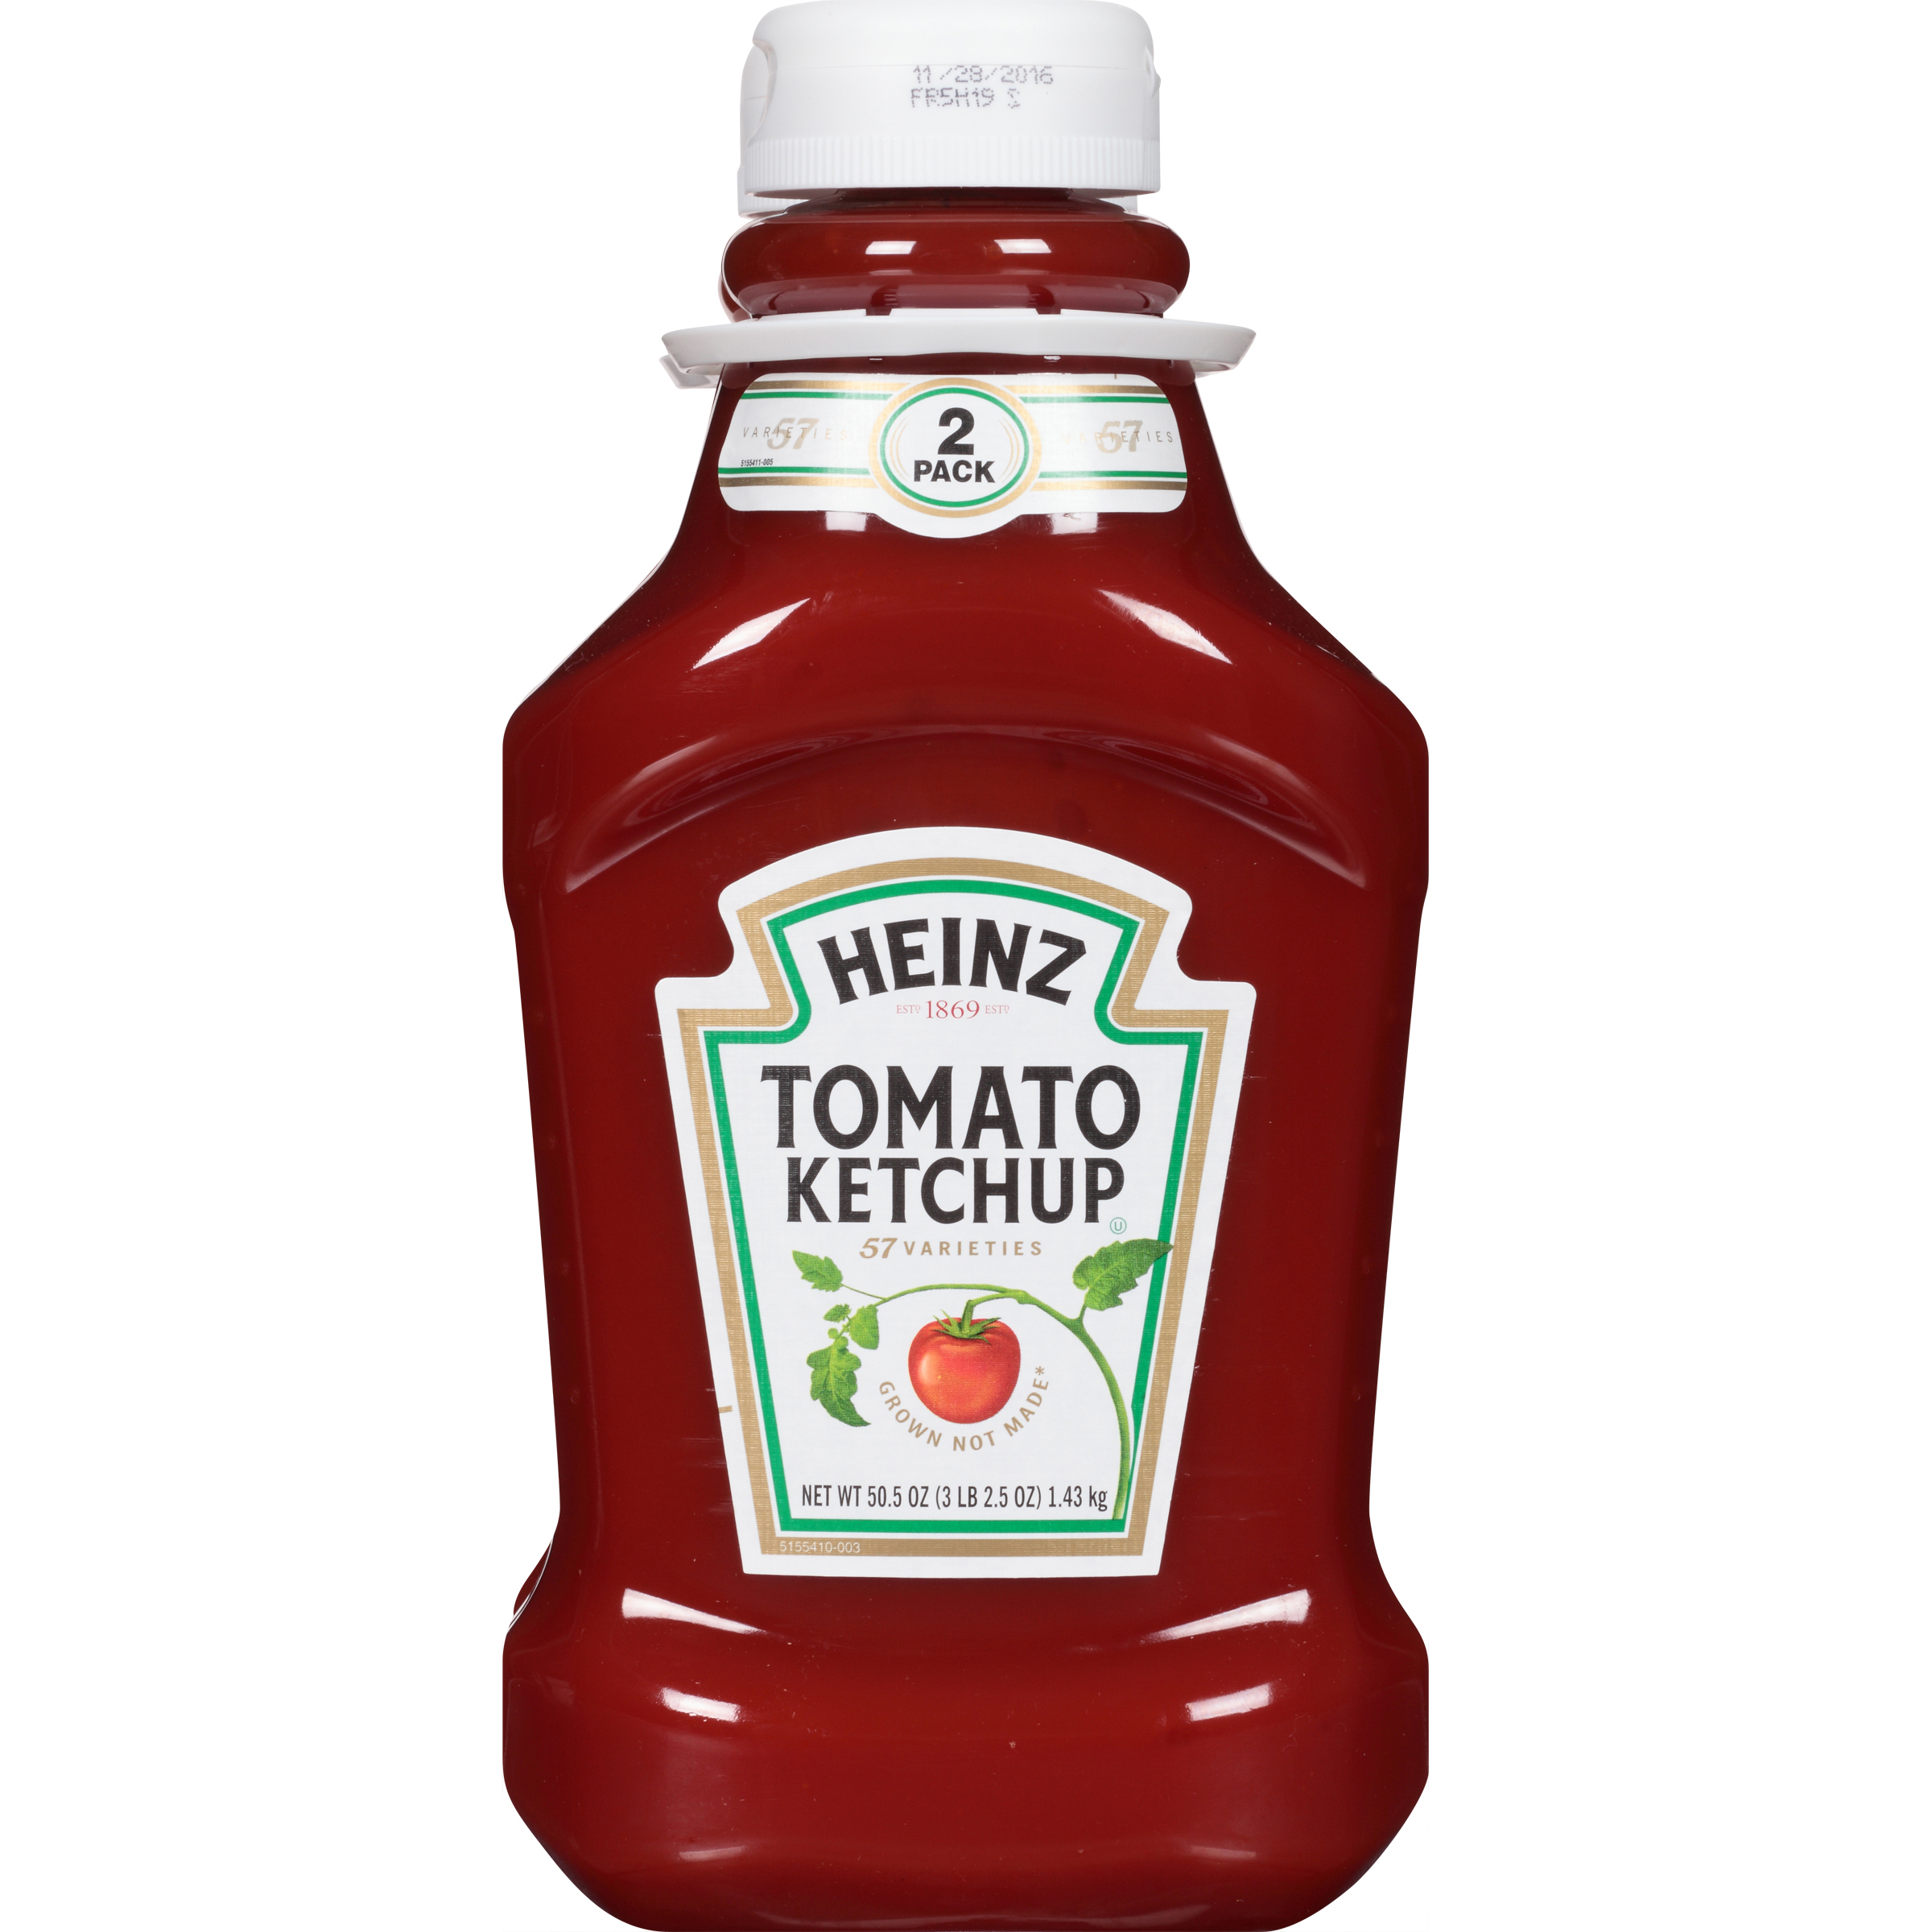 Heinz Tomato Ketchup Bottle, 50 oz, Pack of 2, 101 oz | eBay